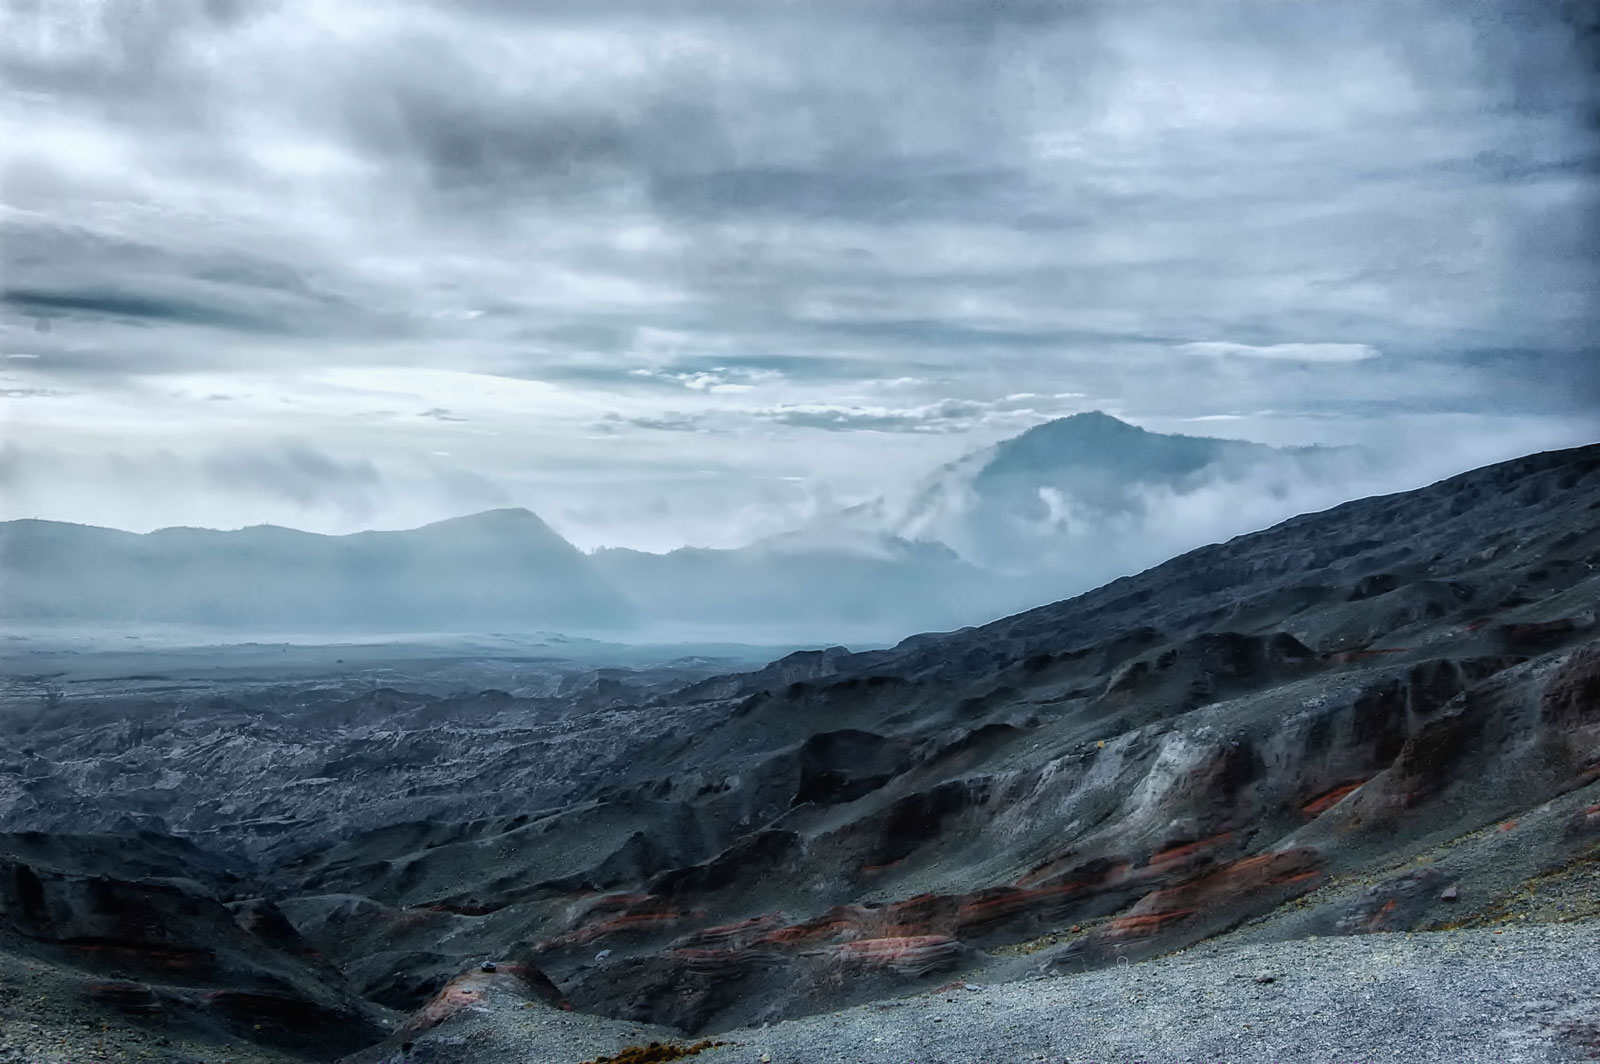 Volcanic Landscape near Gunung Bromo, Indonesia